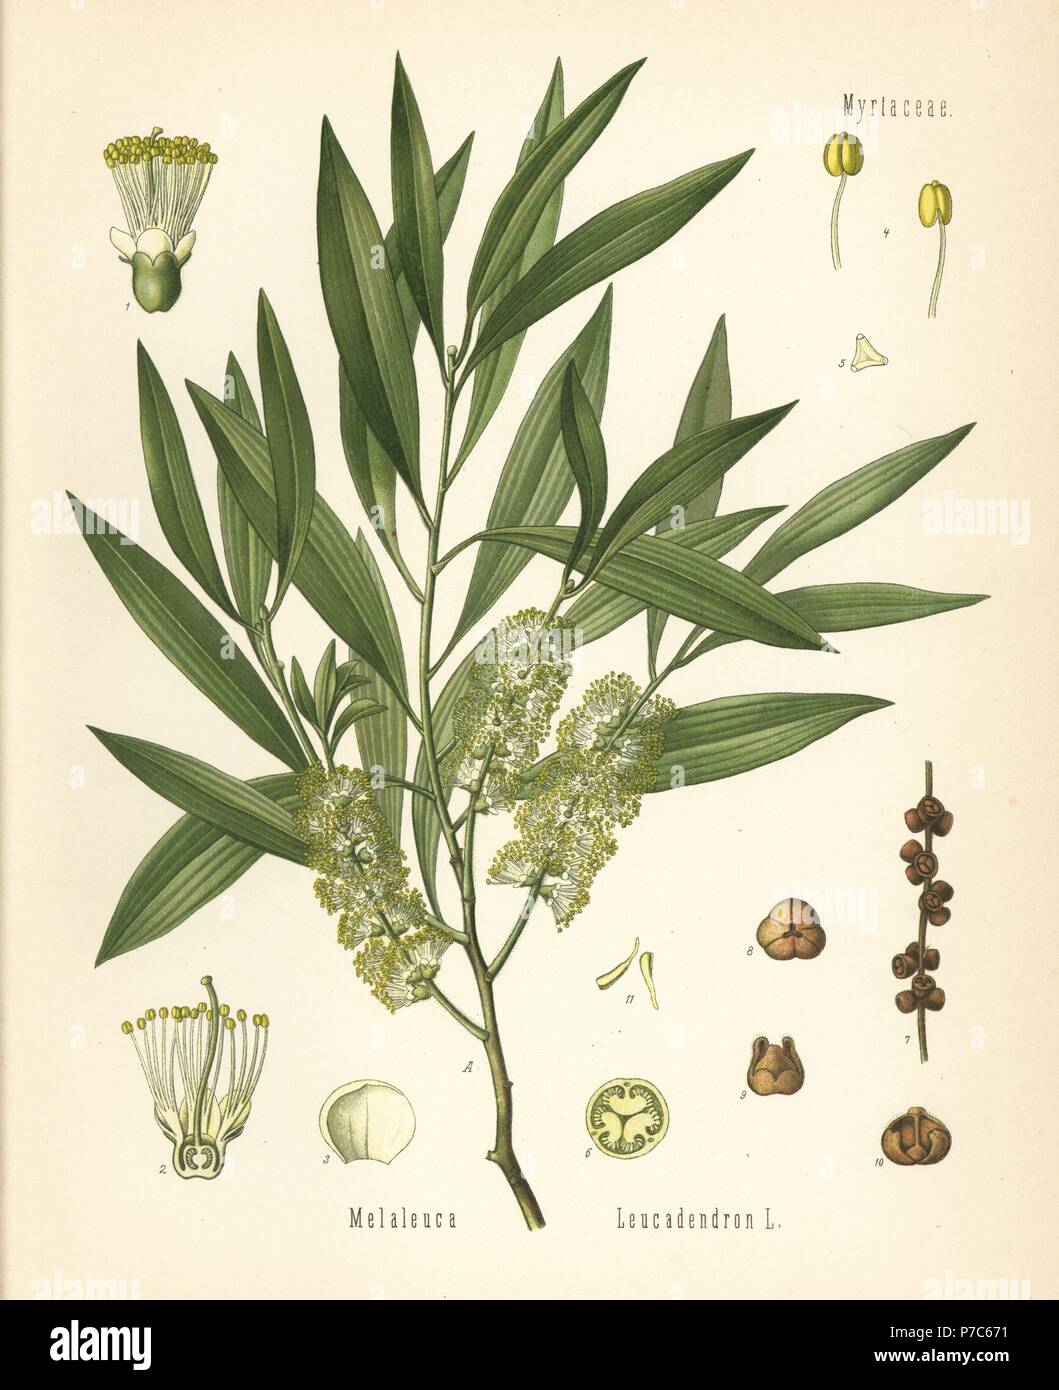 Cajuput or white samet, Melaleuca cajuputi. Chromolithograph after a botanical illustration from Hermann Adolph Koehler's Medicinal Plants, edited by Gustav Pabst, Koehler, Germany, 1887. Stock Photo